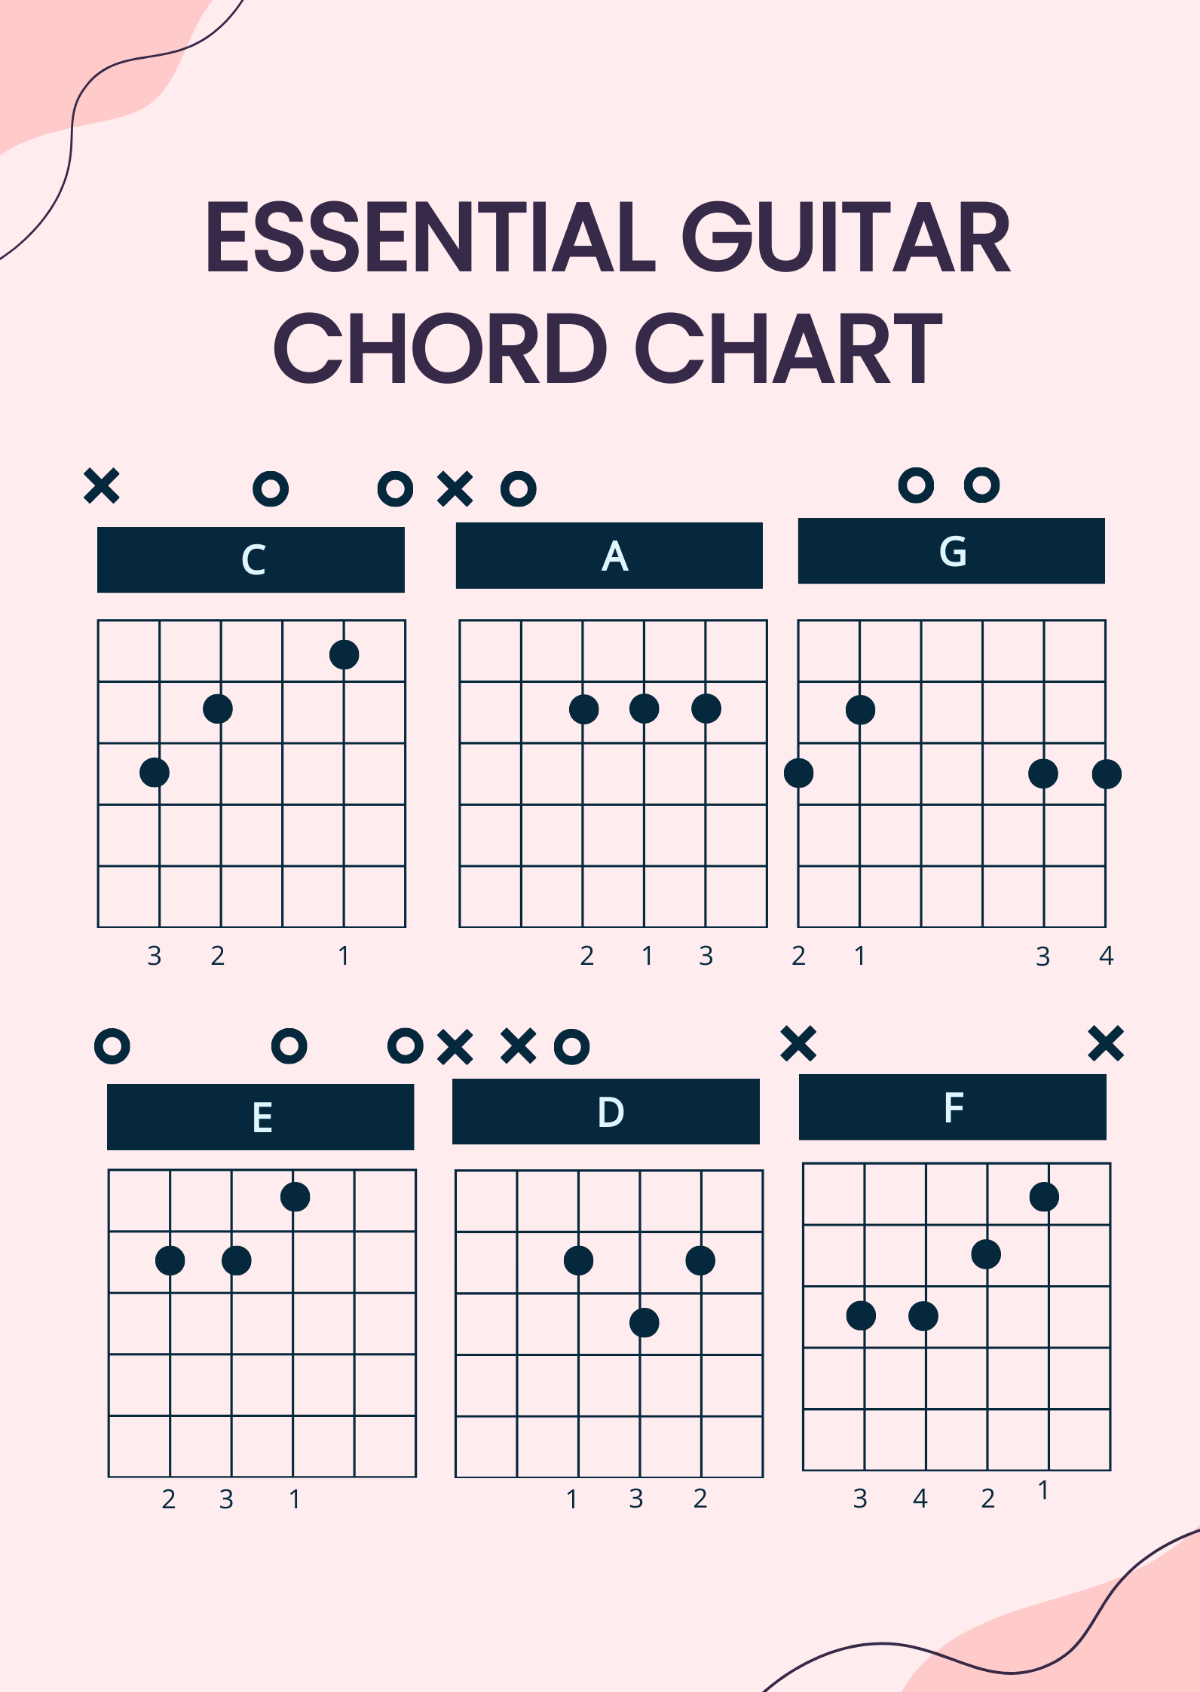 Essential Guitar Chord Chart Template